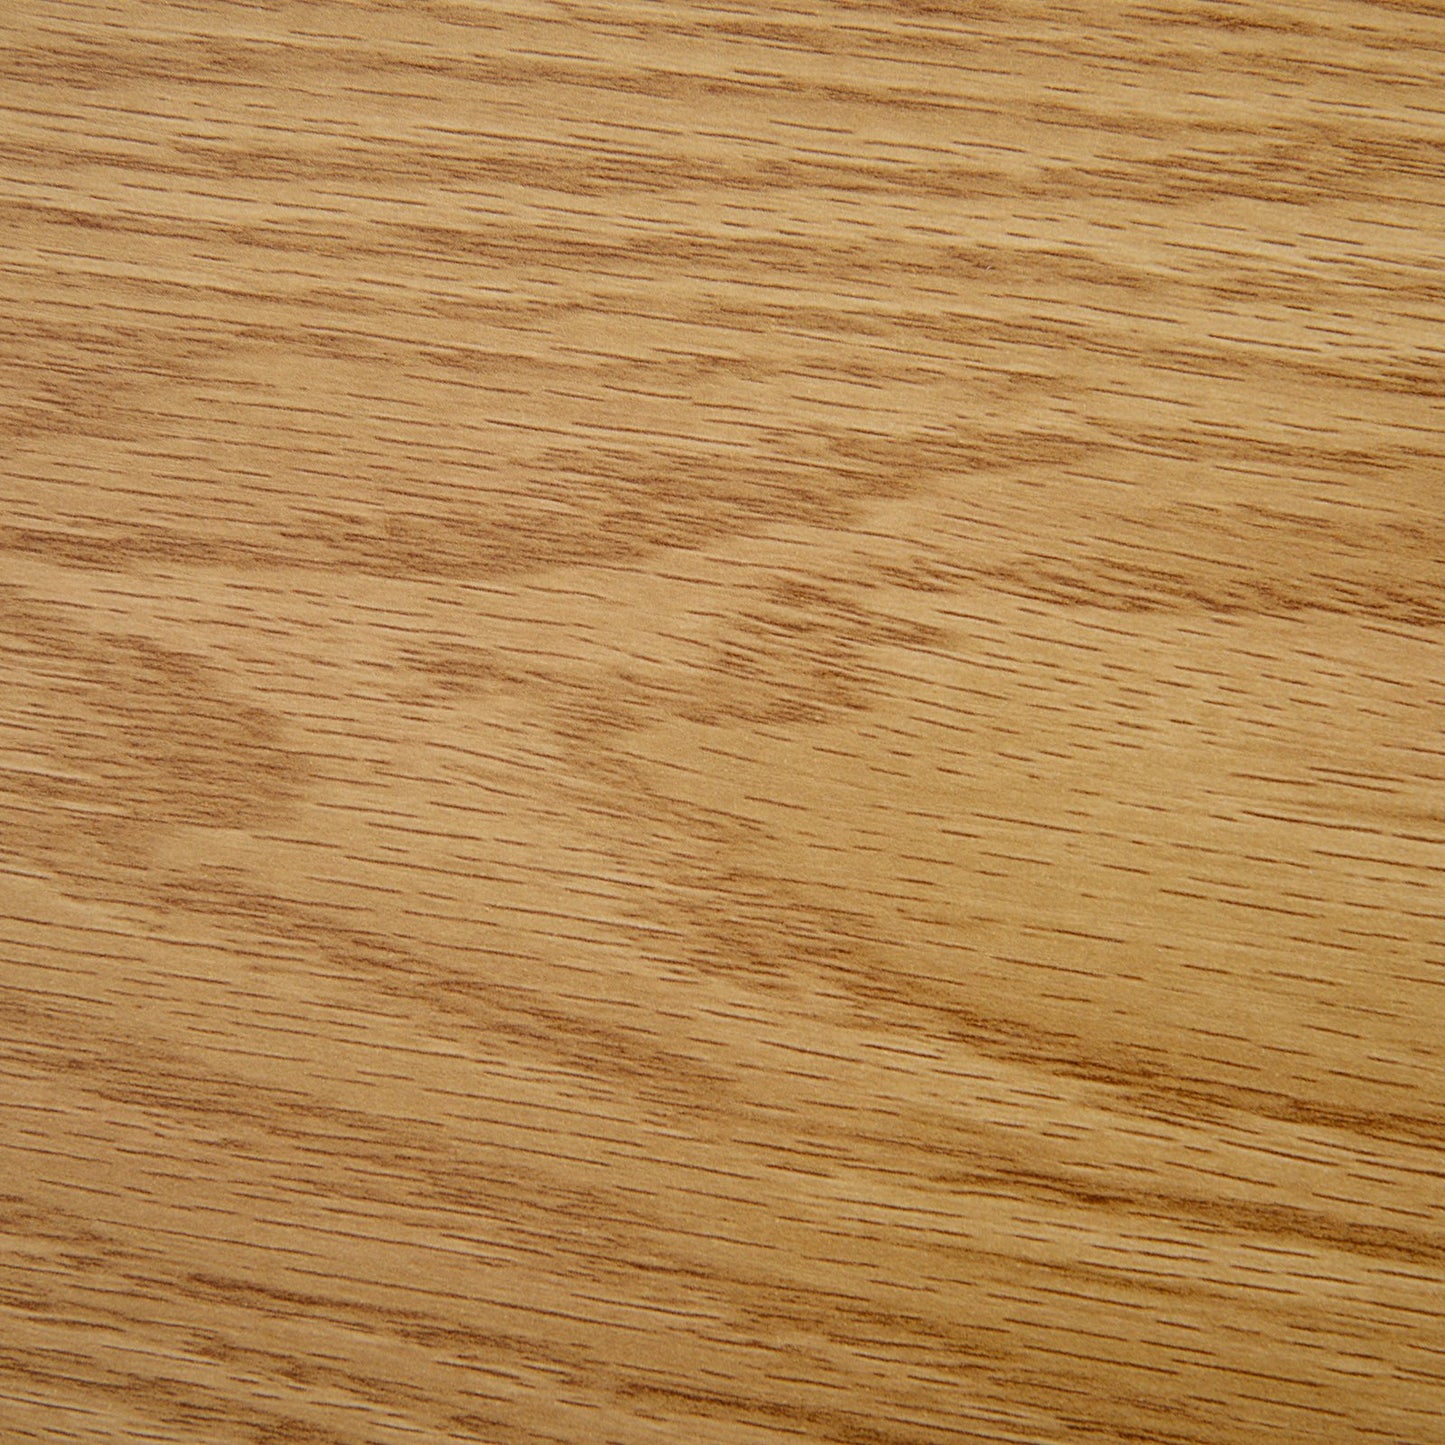 HOMCOM MDF Rustic Single Draw Bedside Table Grey